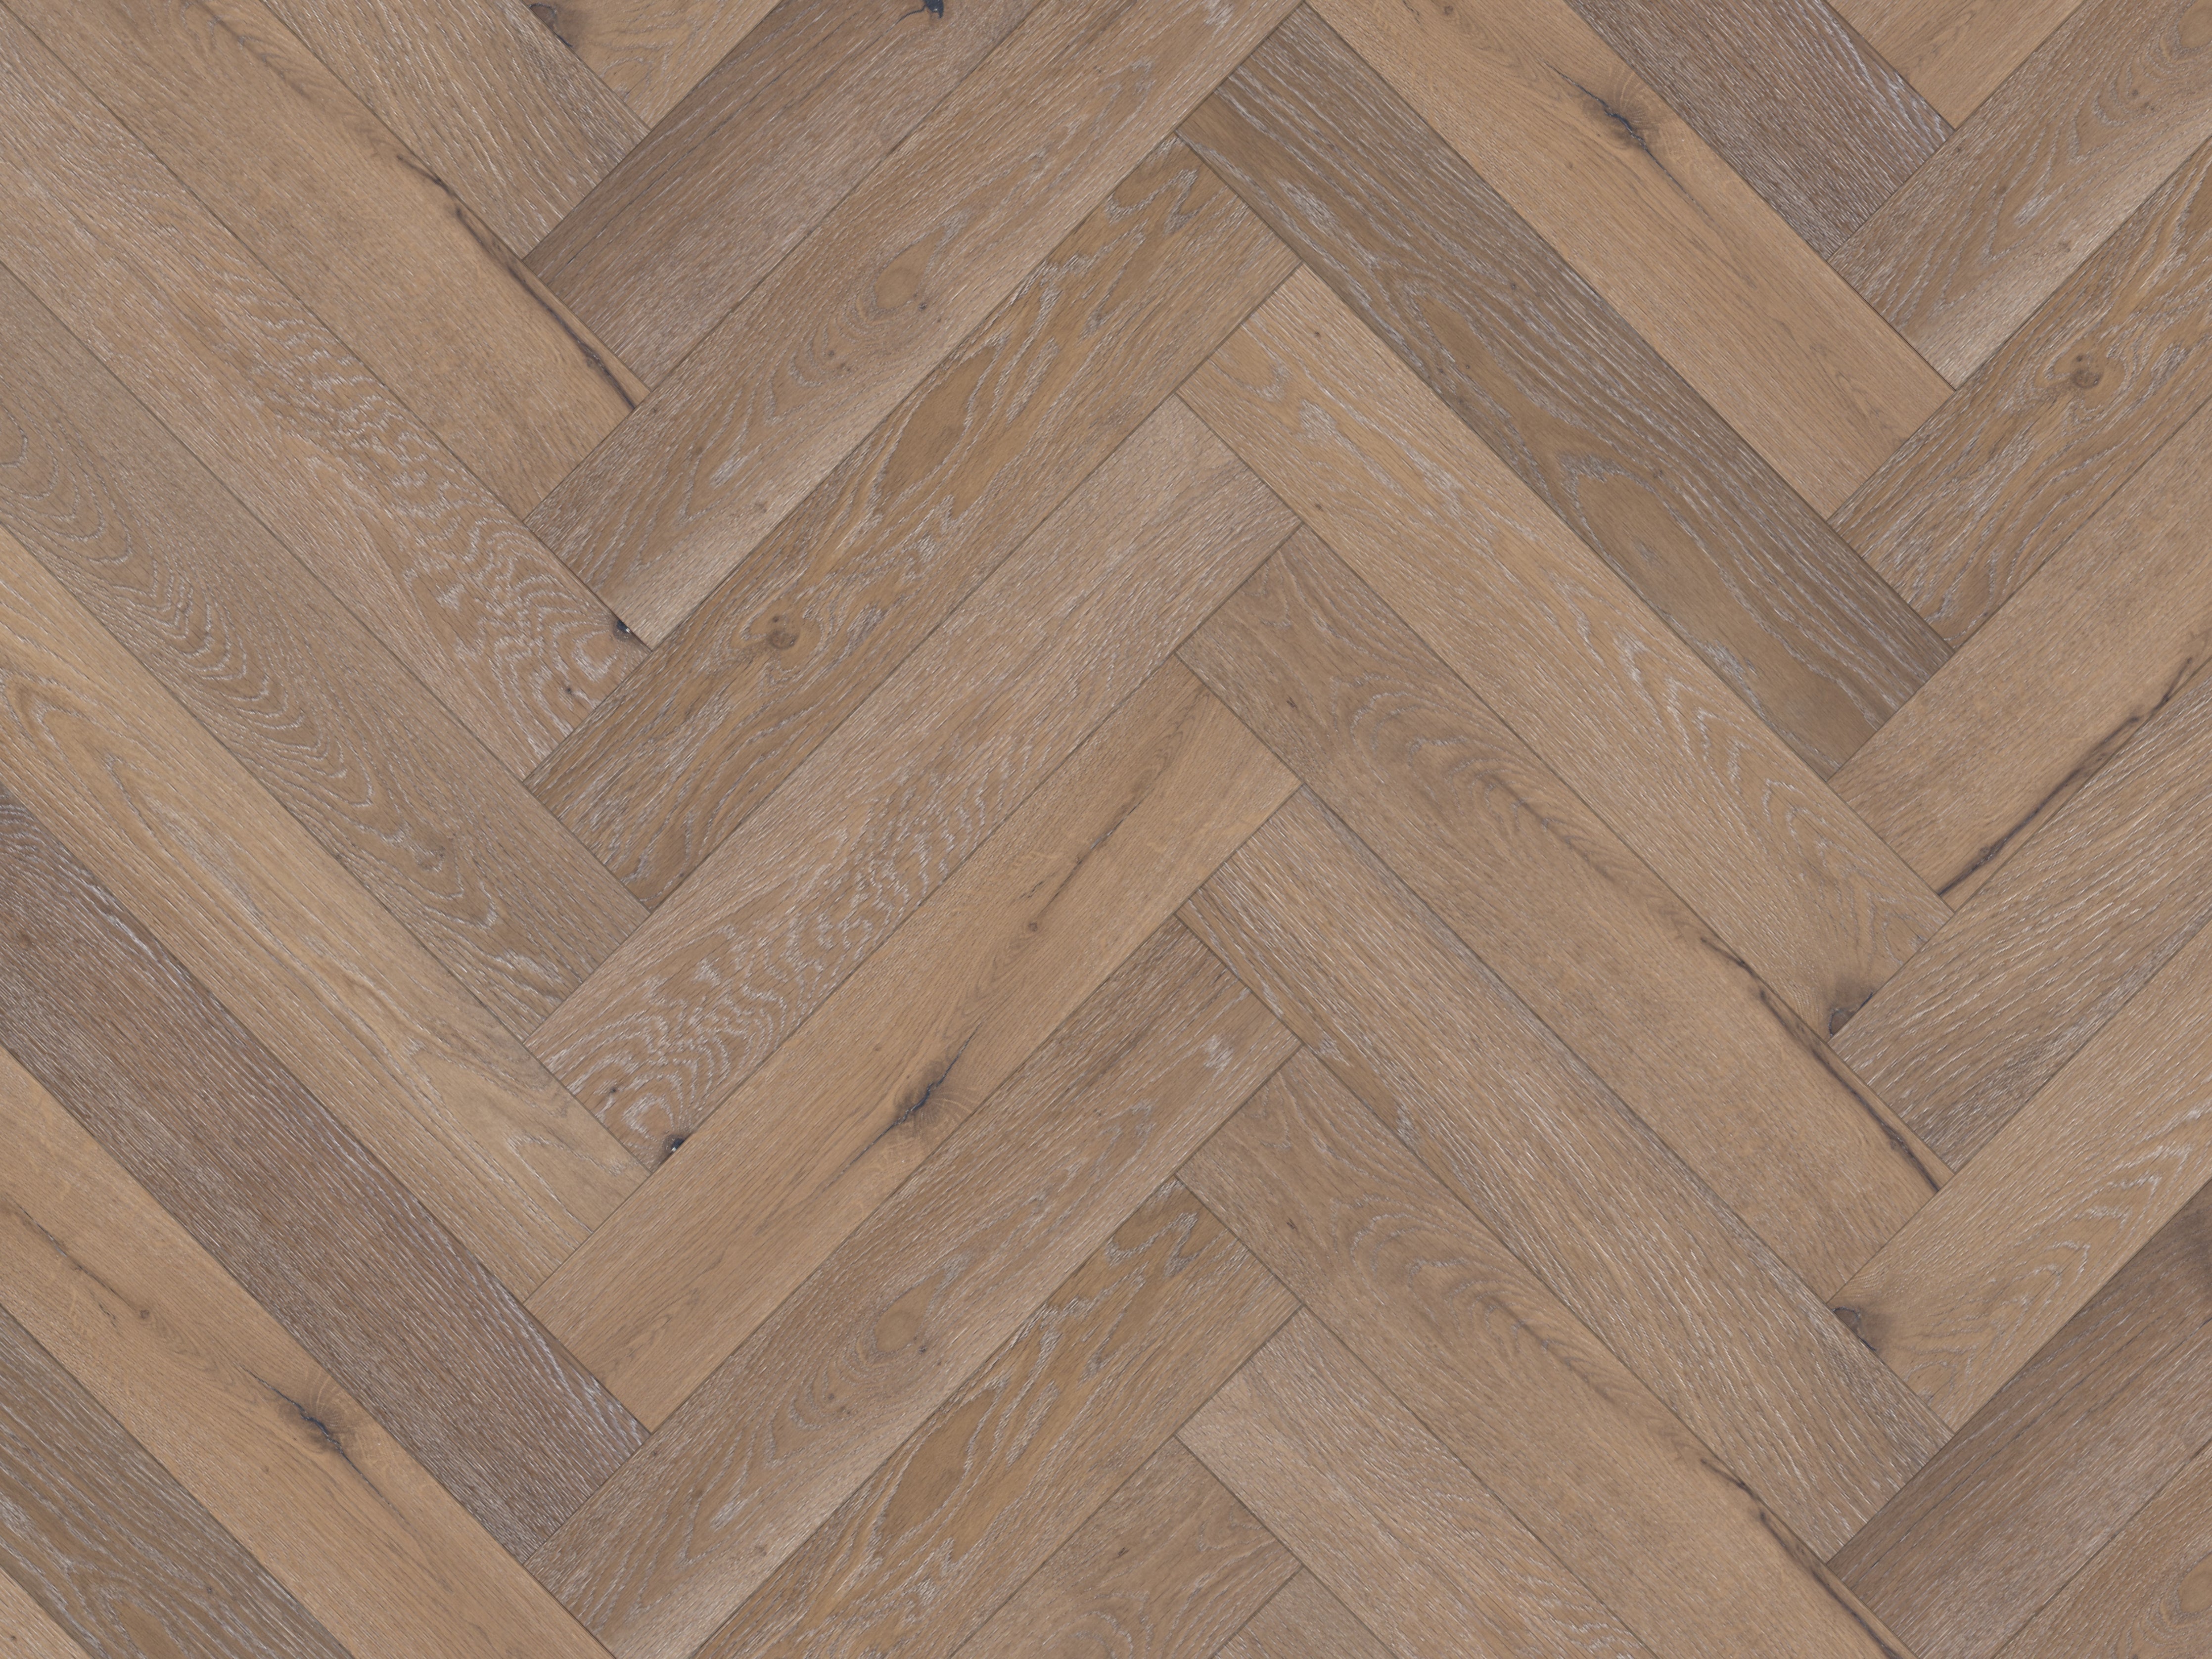 duchateau signature herringbone faber european oak engineered hardnatural wood floor uv oil finish for interior use distributed by surface group international